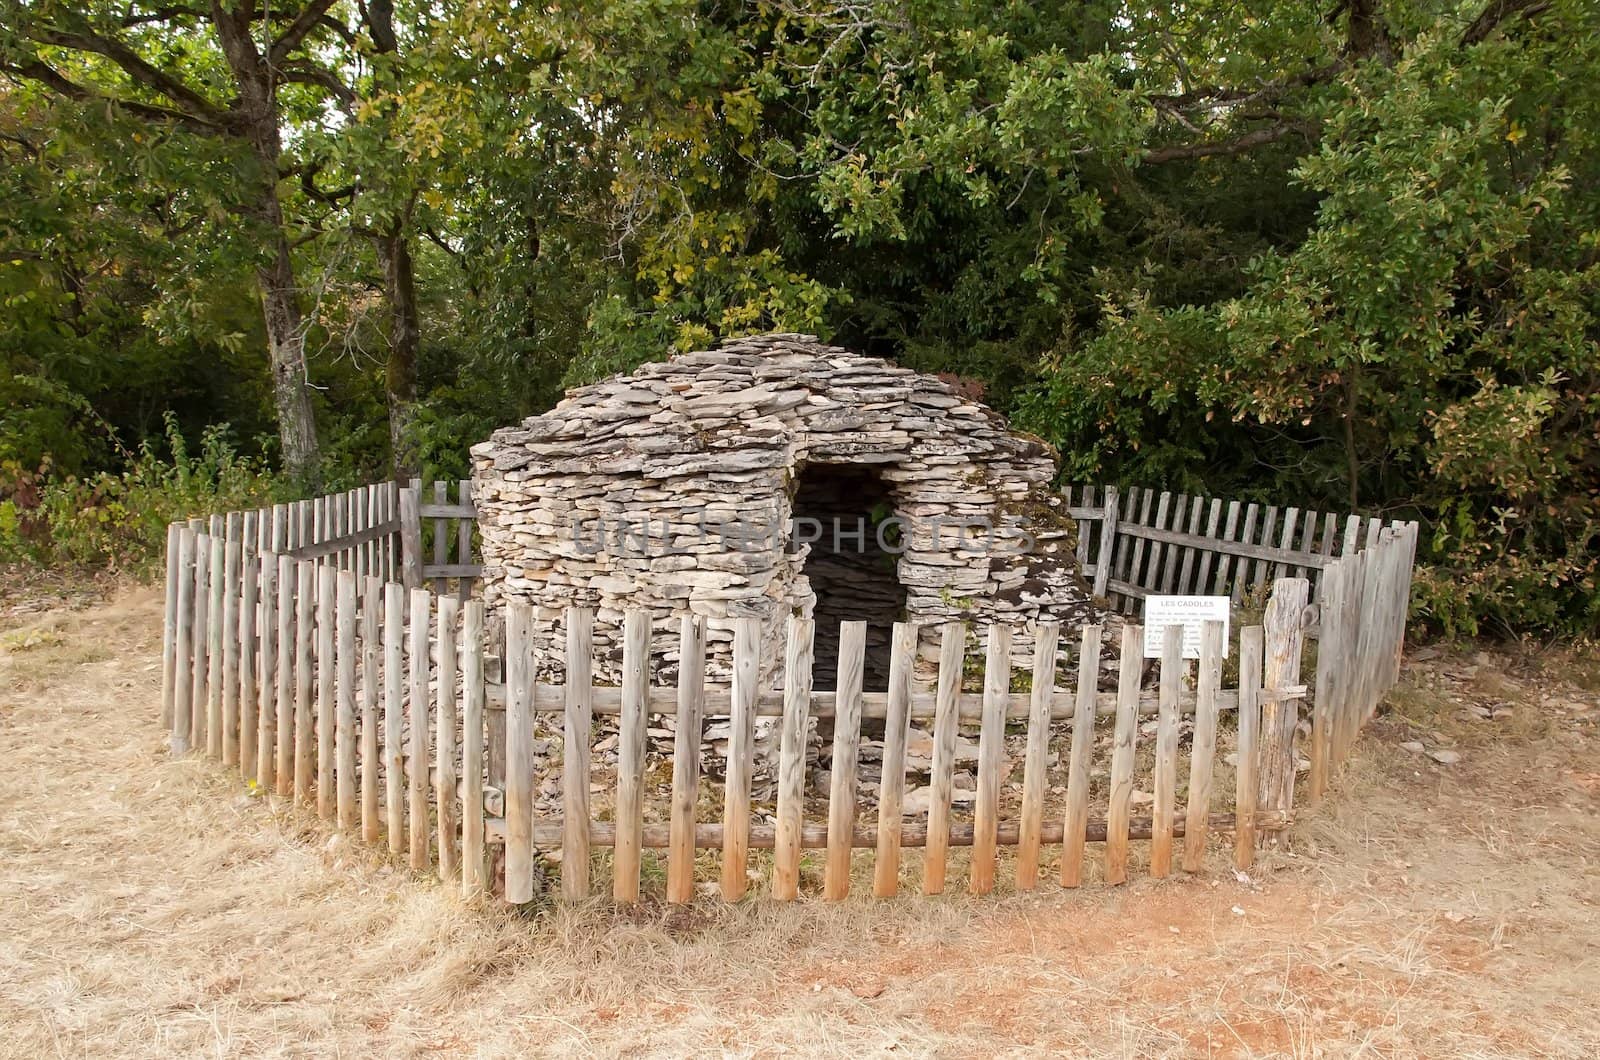 Cadole, stony shelter for shepherd and wine growers (Burgundy France) by neko92vl